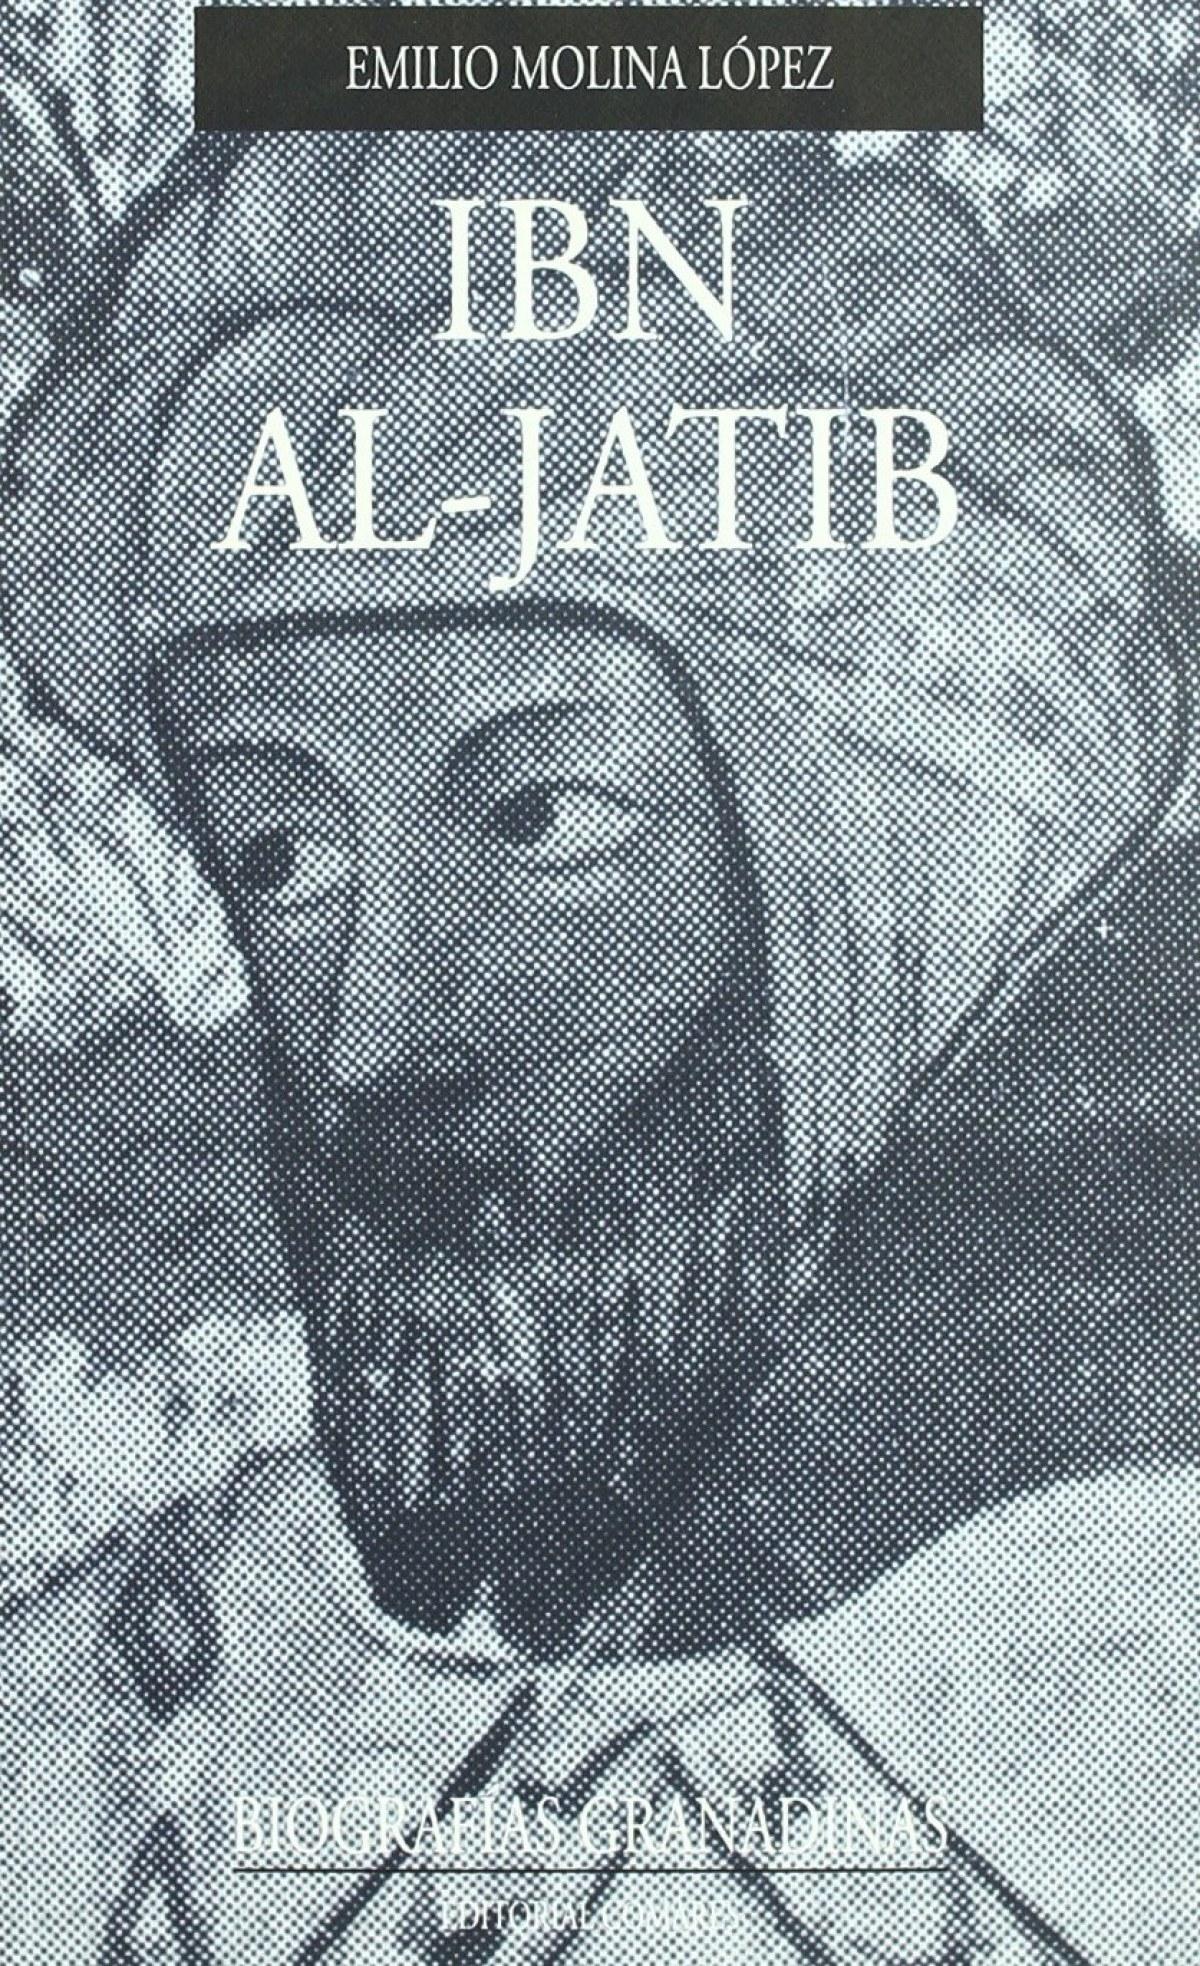 Ibn Al-Jatib. 